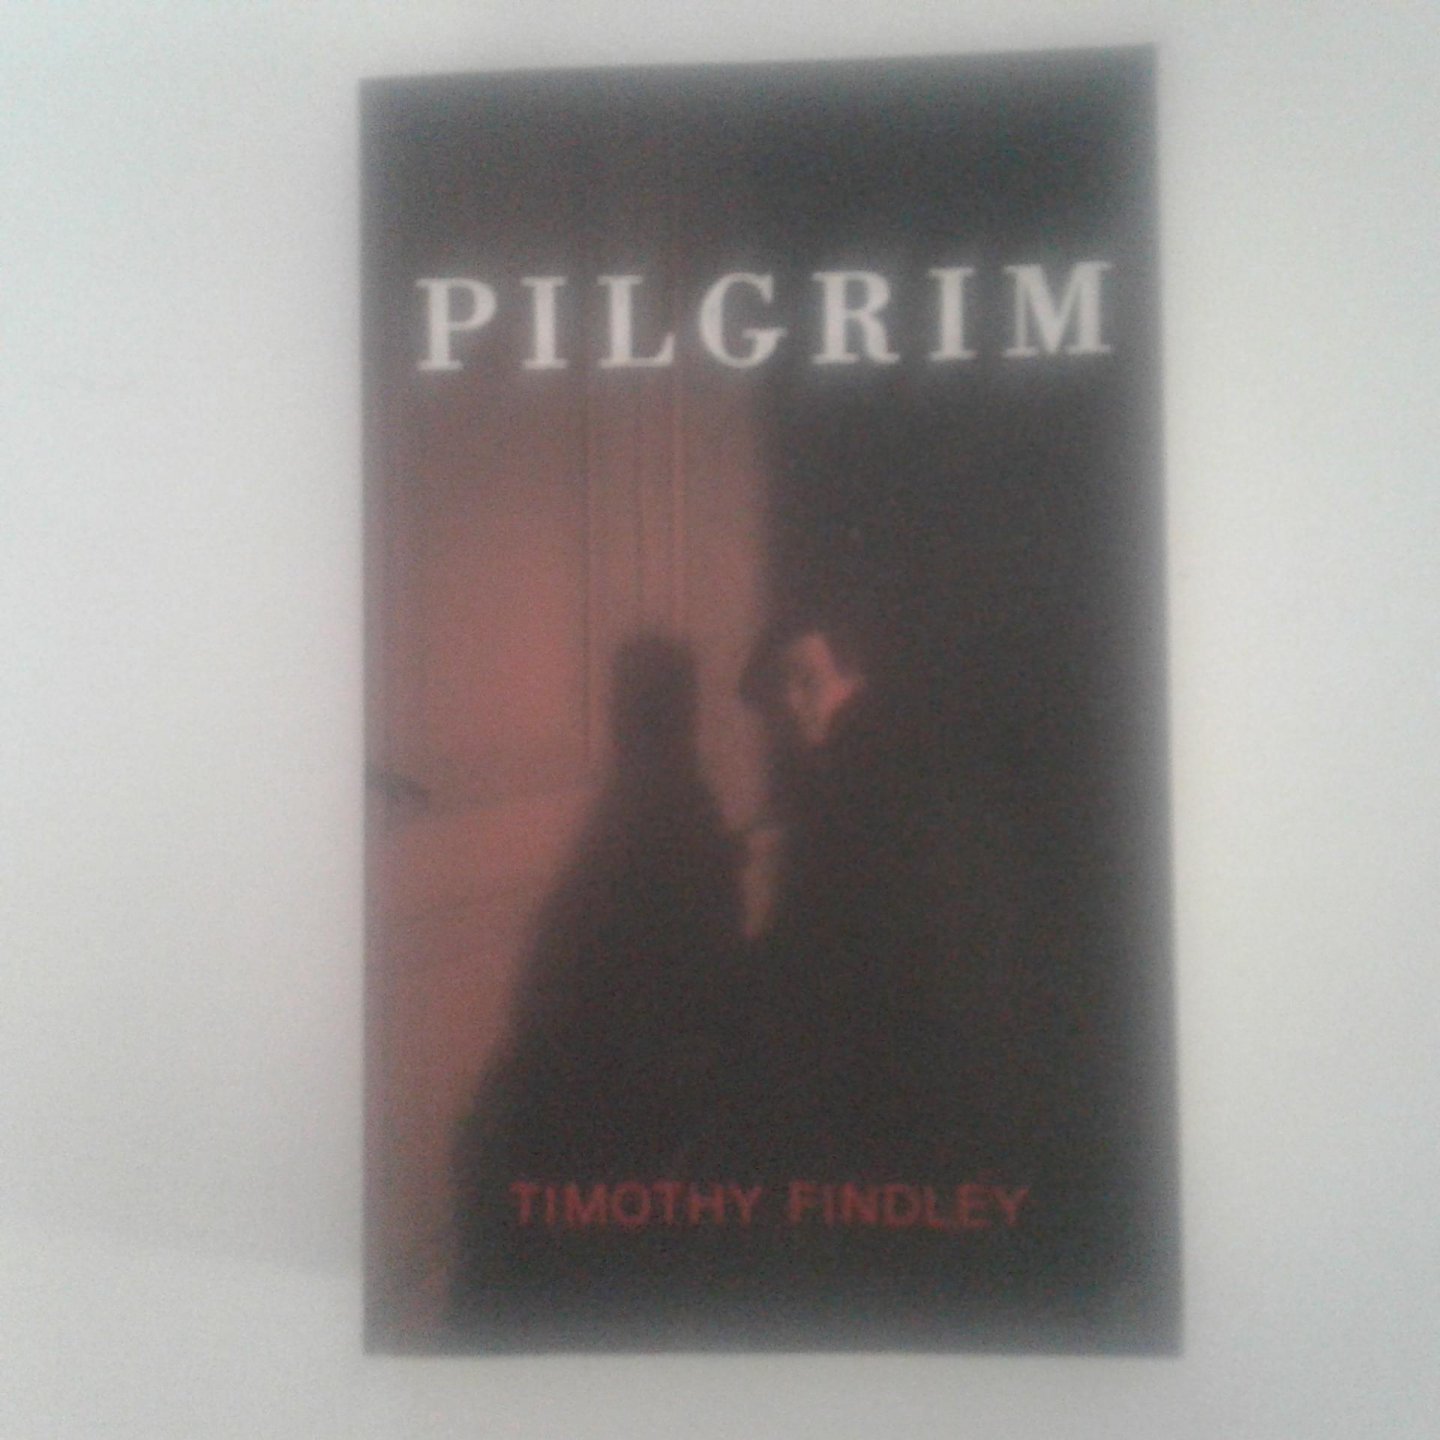 Findley, Timothy - Pilgrim